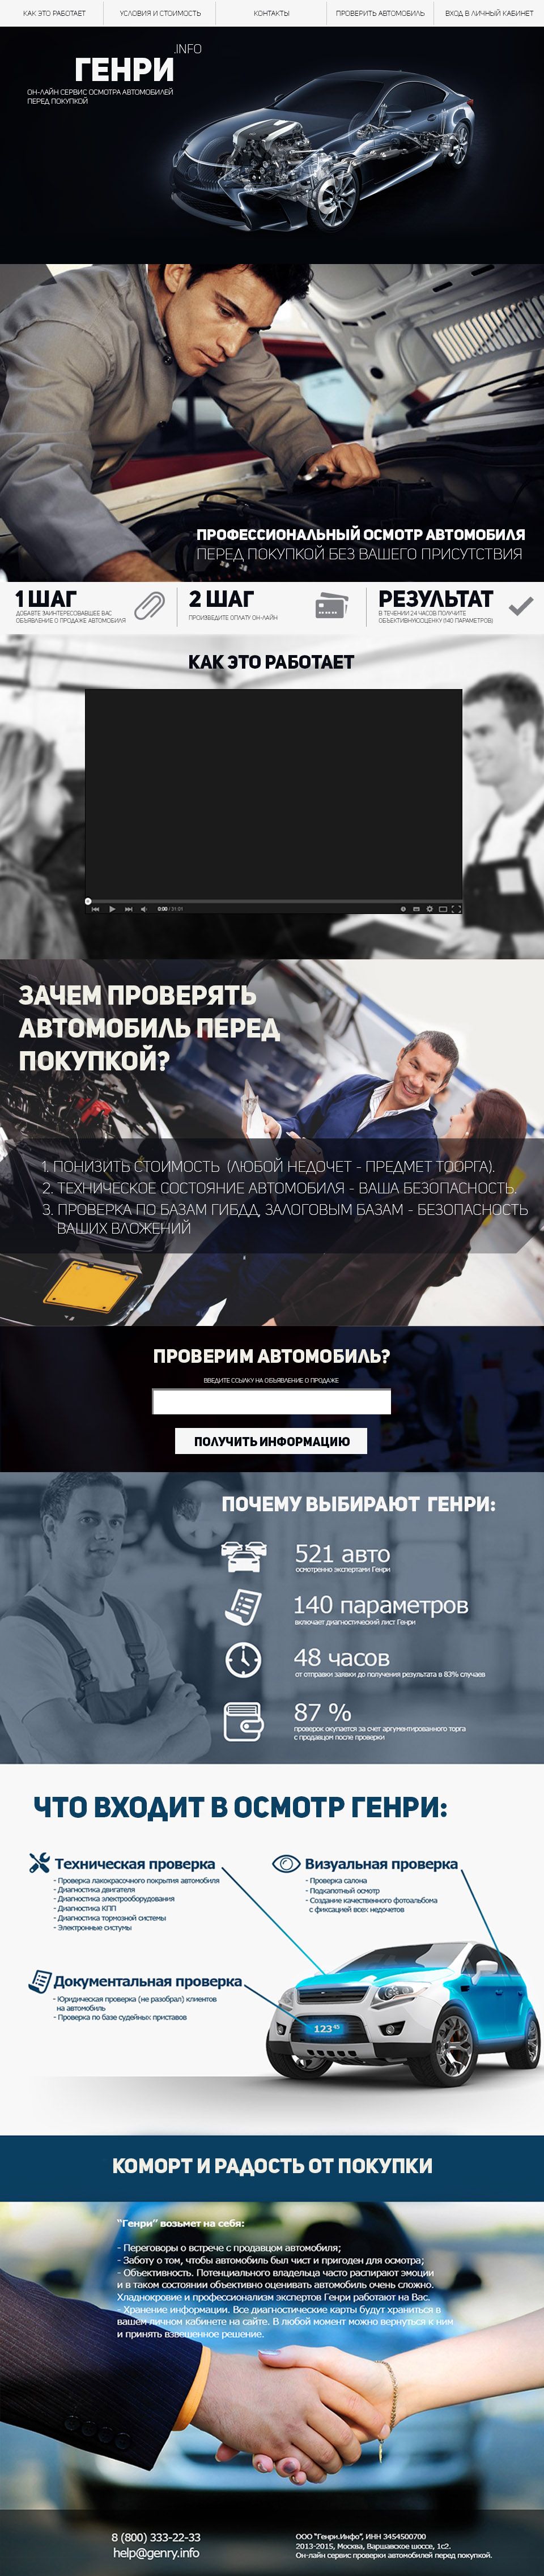 Главная страница онлайн-сервиса - дизайнер OlegSoyka